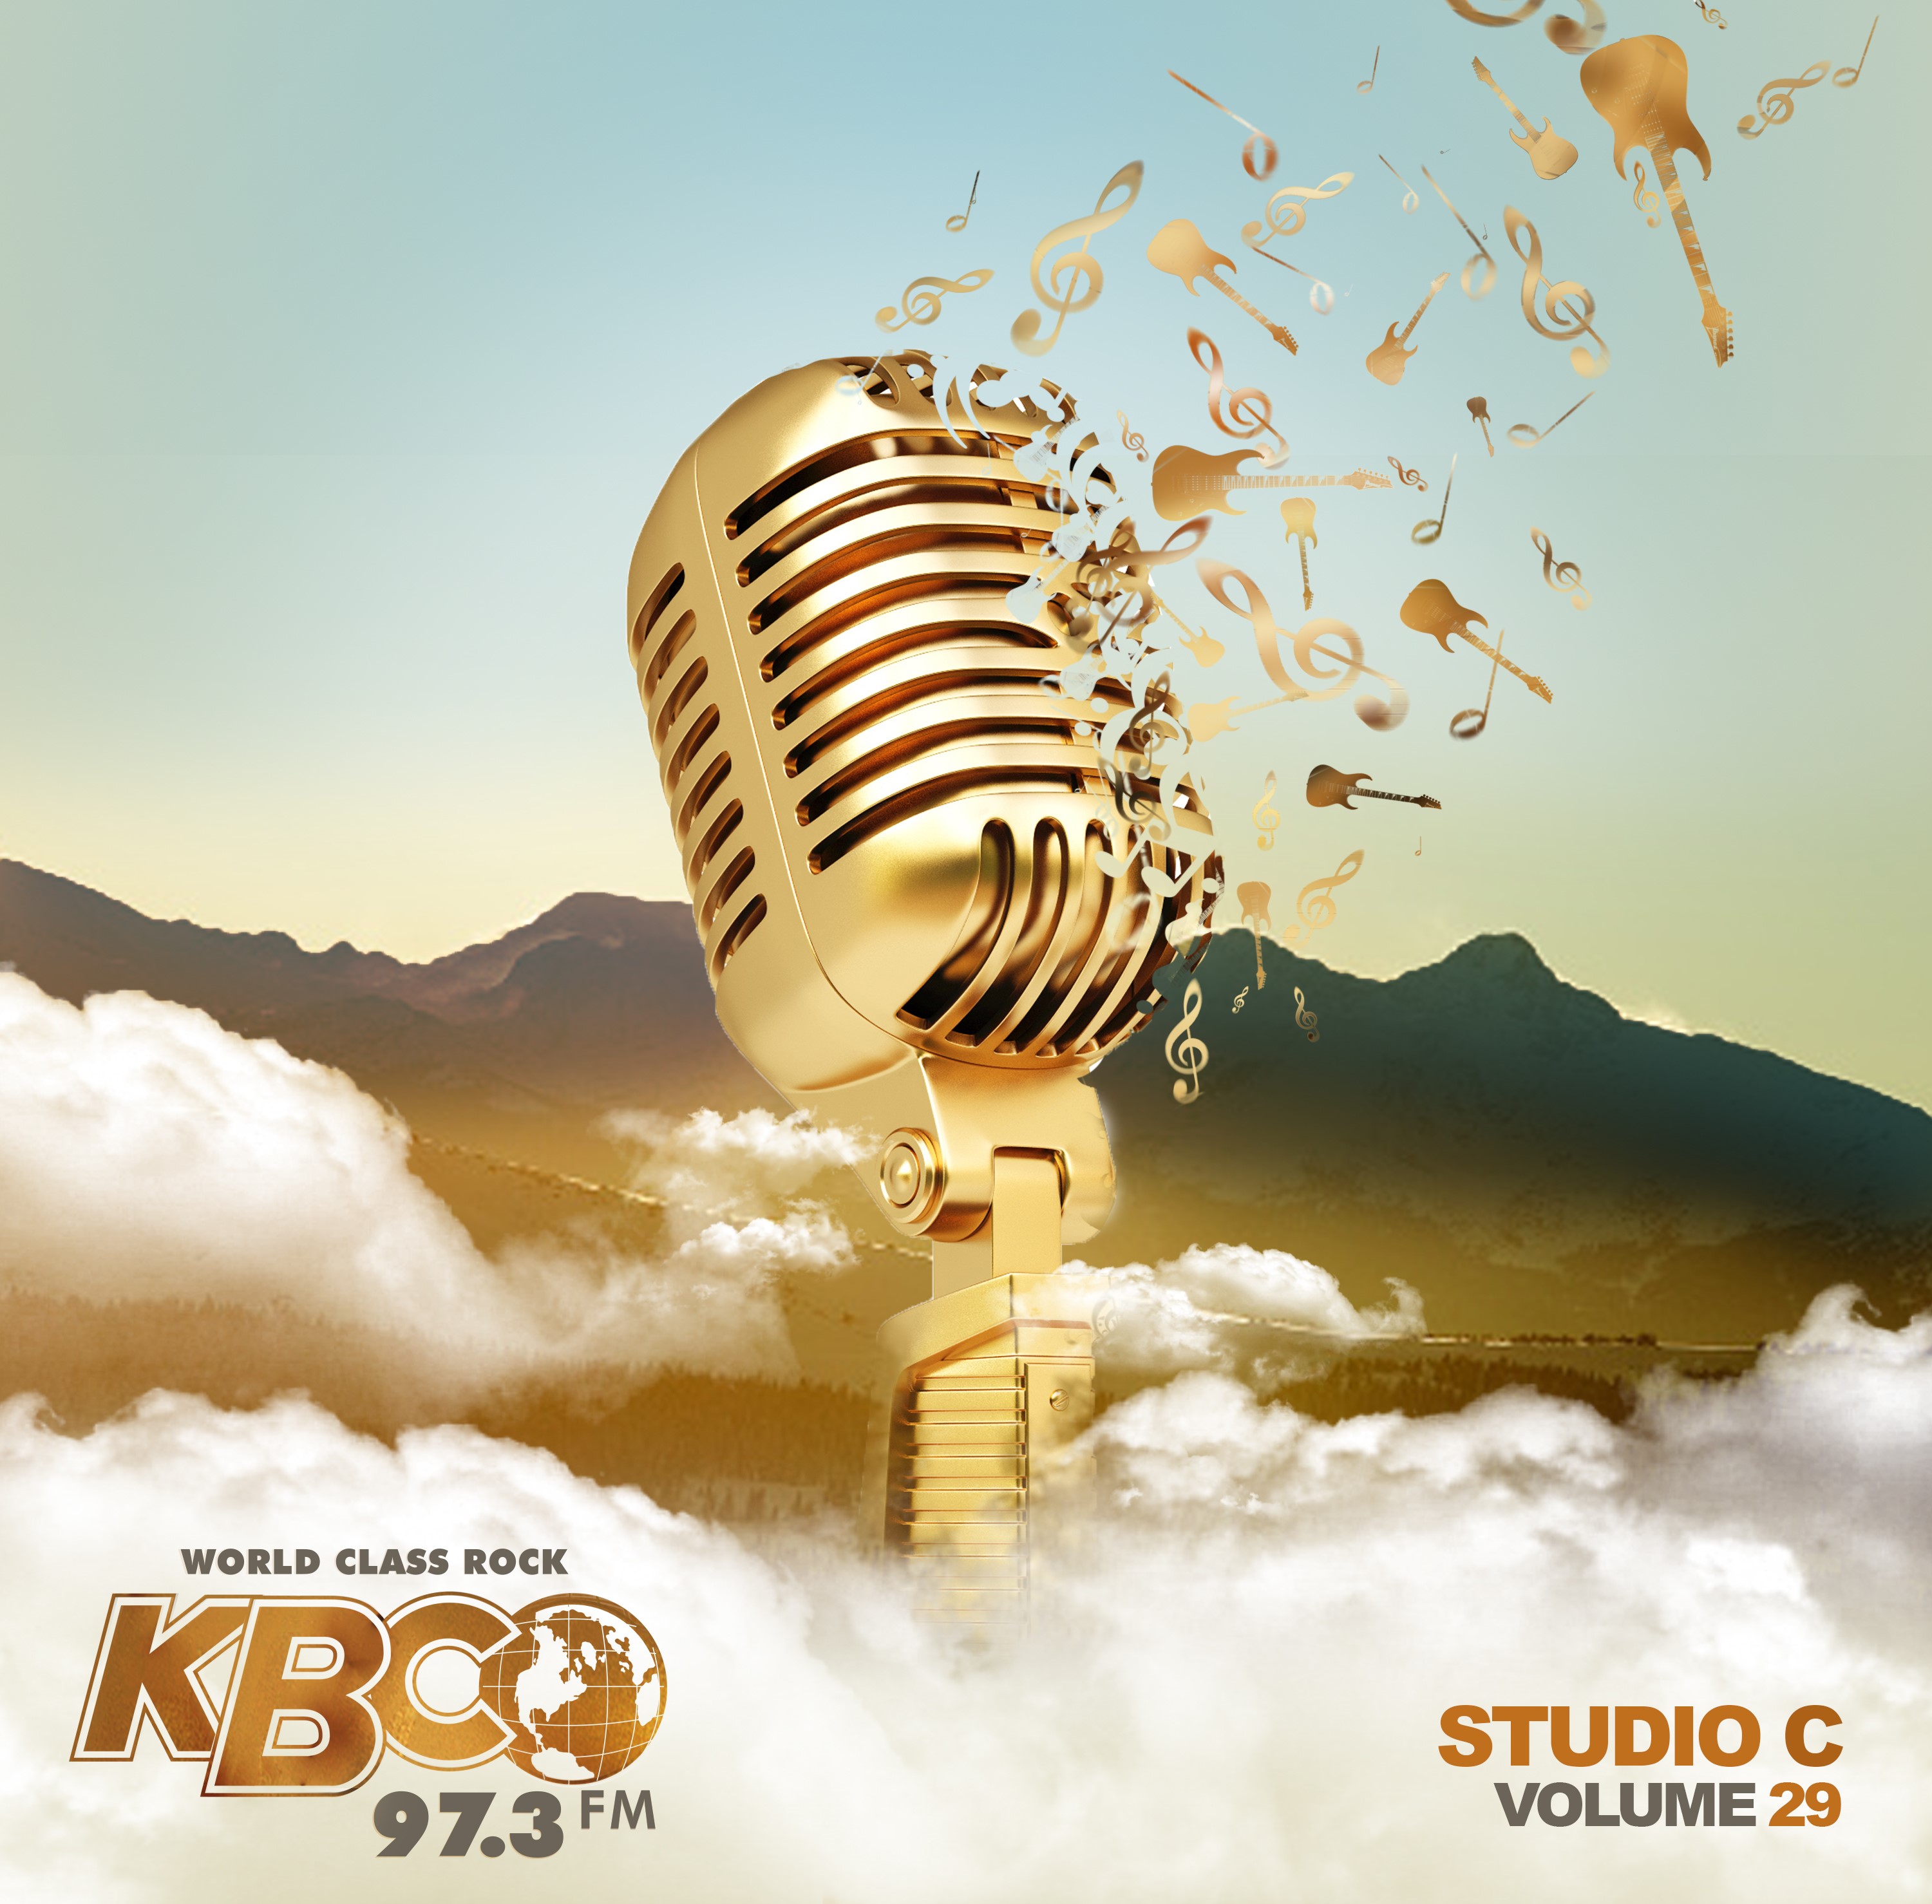 KBCO Announces Studio C Volume 29 Release Date & Track Listing